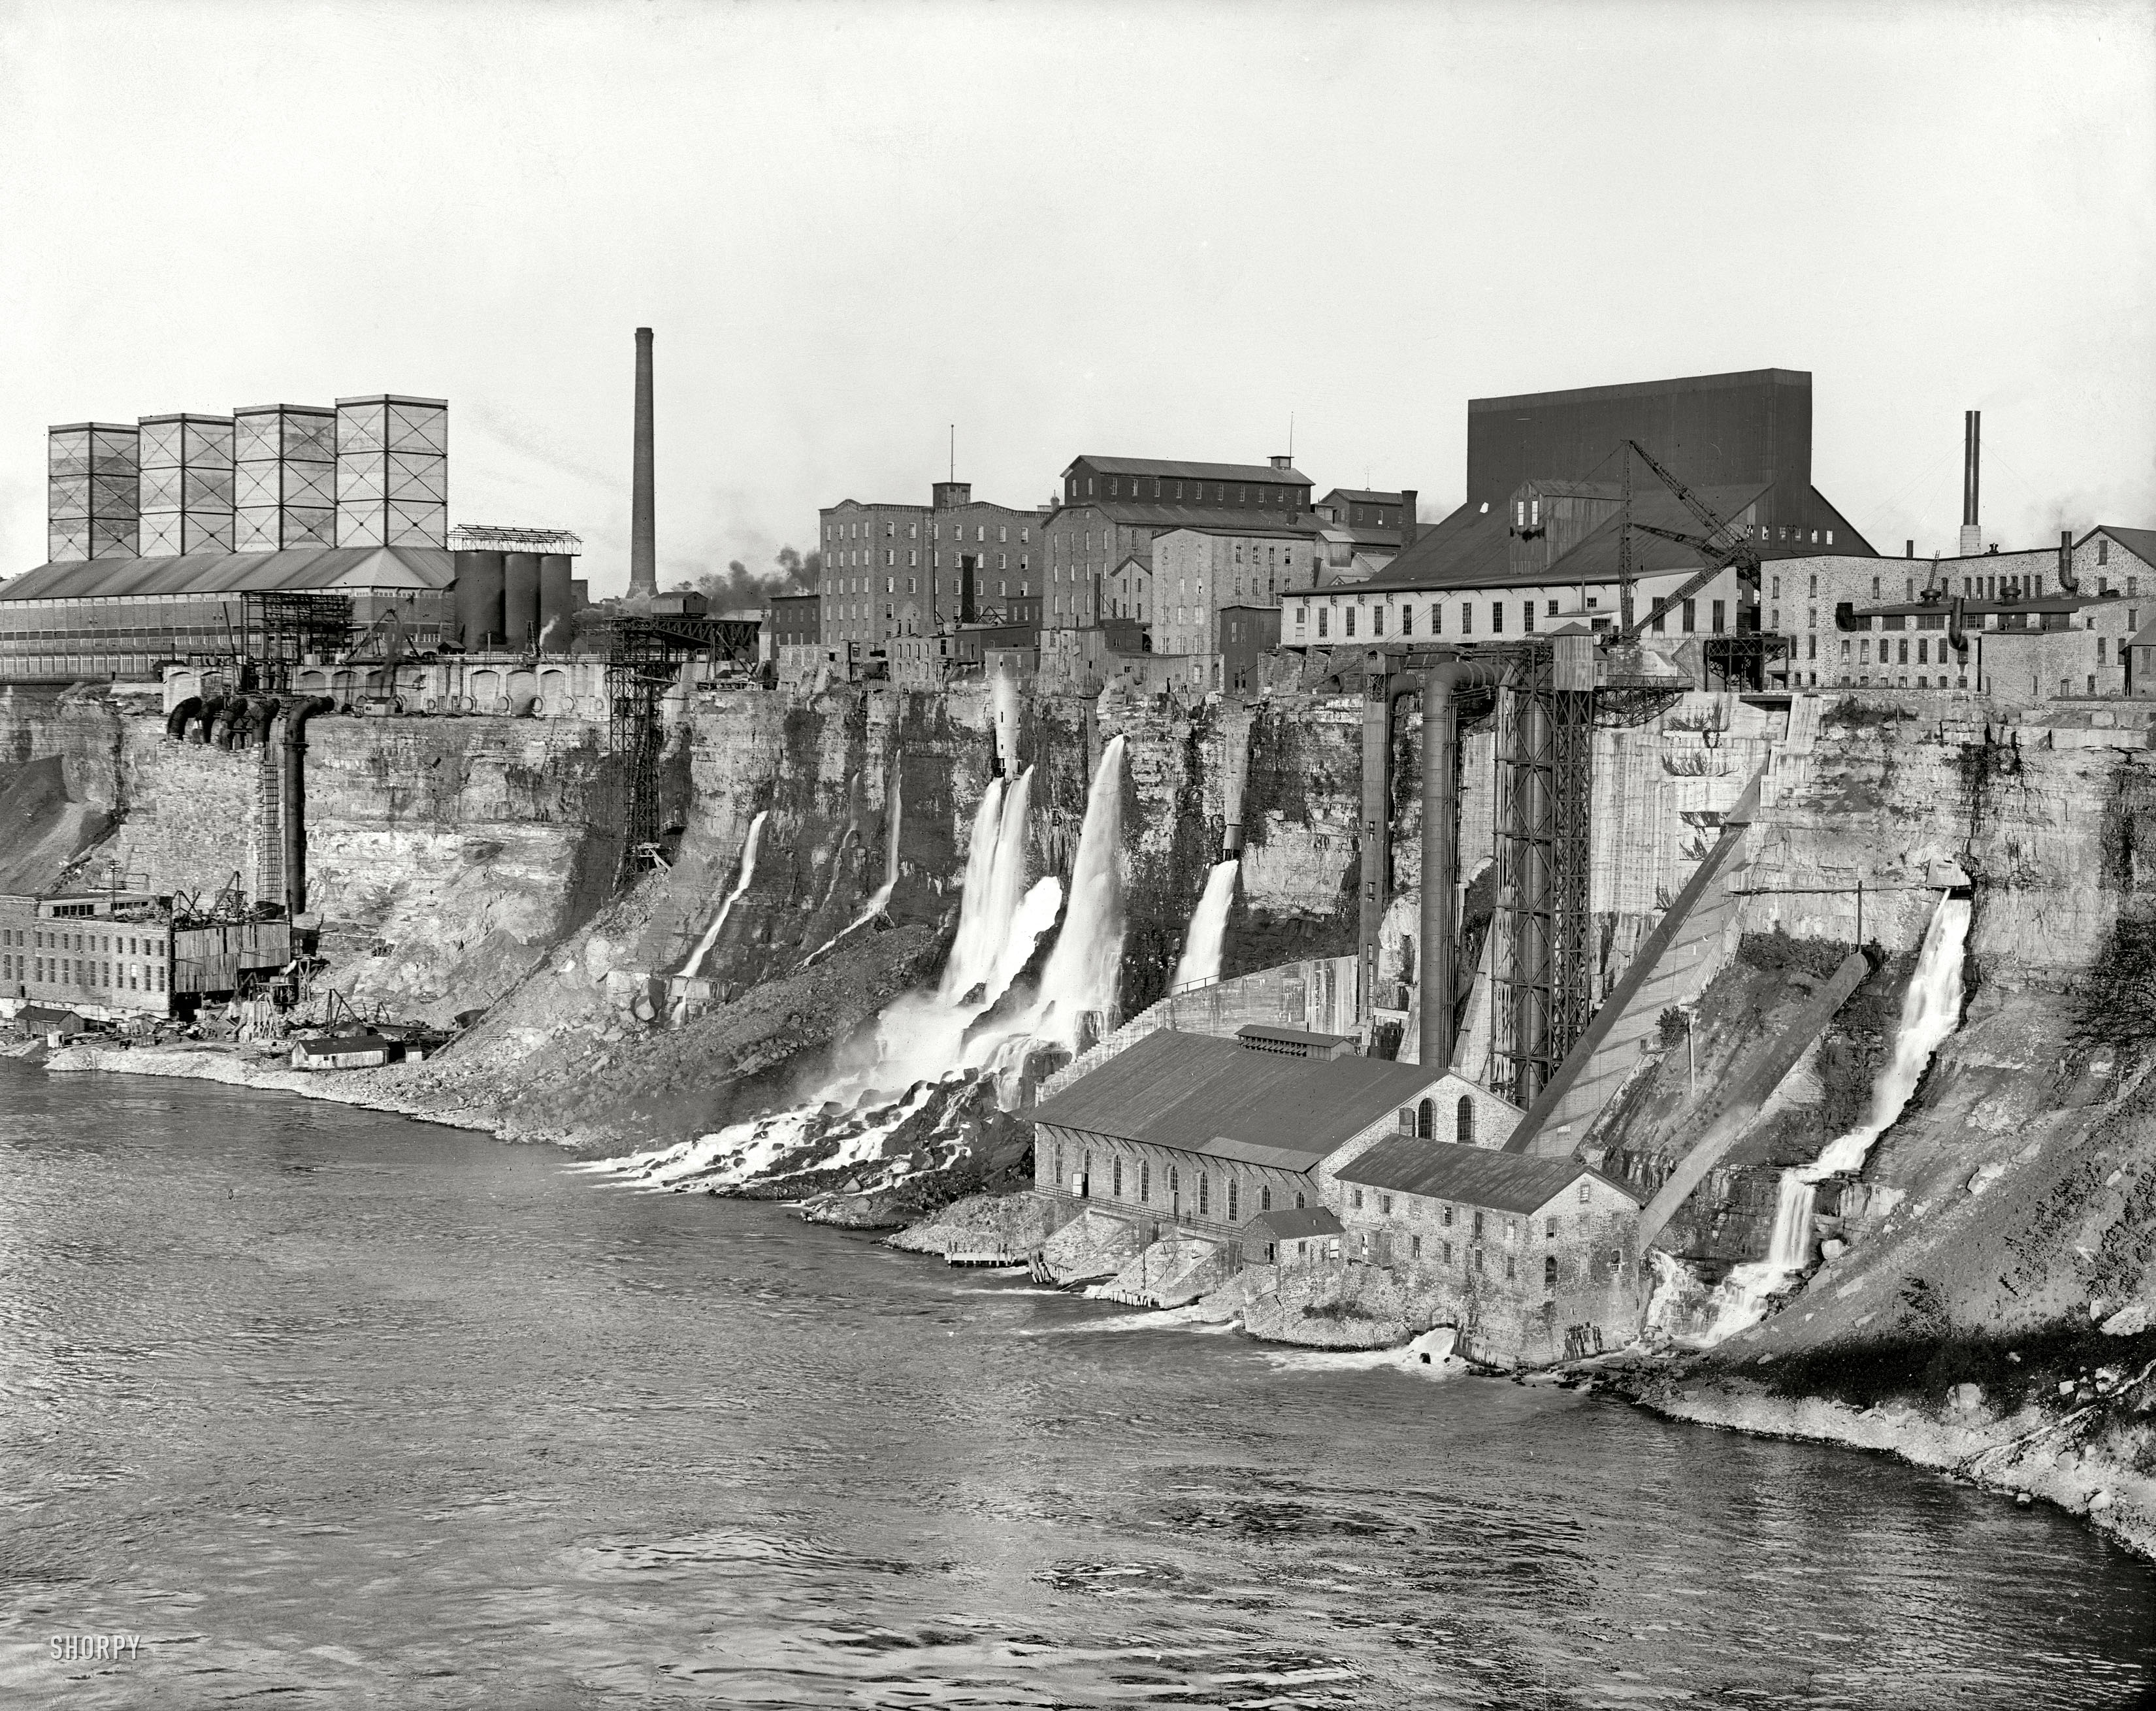 Niagara Falls, New York, circa 1906. "Mills along the gorge." 8x10 inch dry plate glass negative, Detroit Publishing Company. View full size.